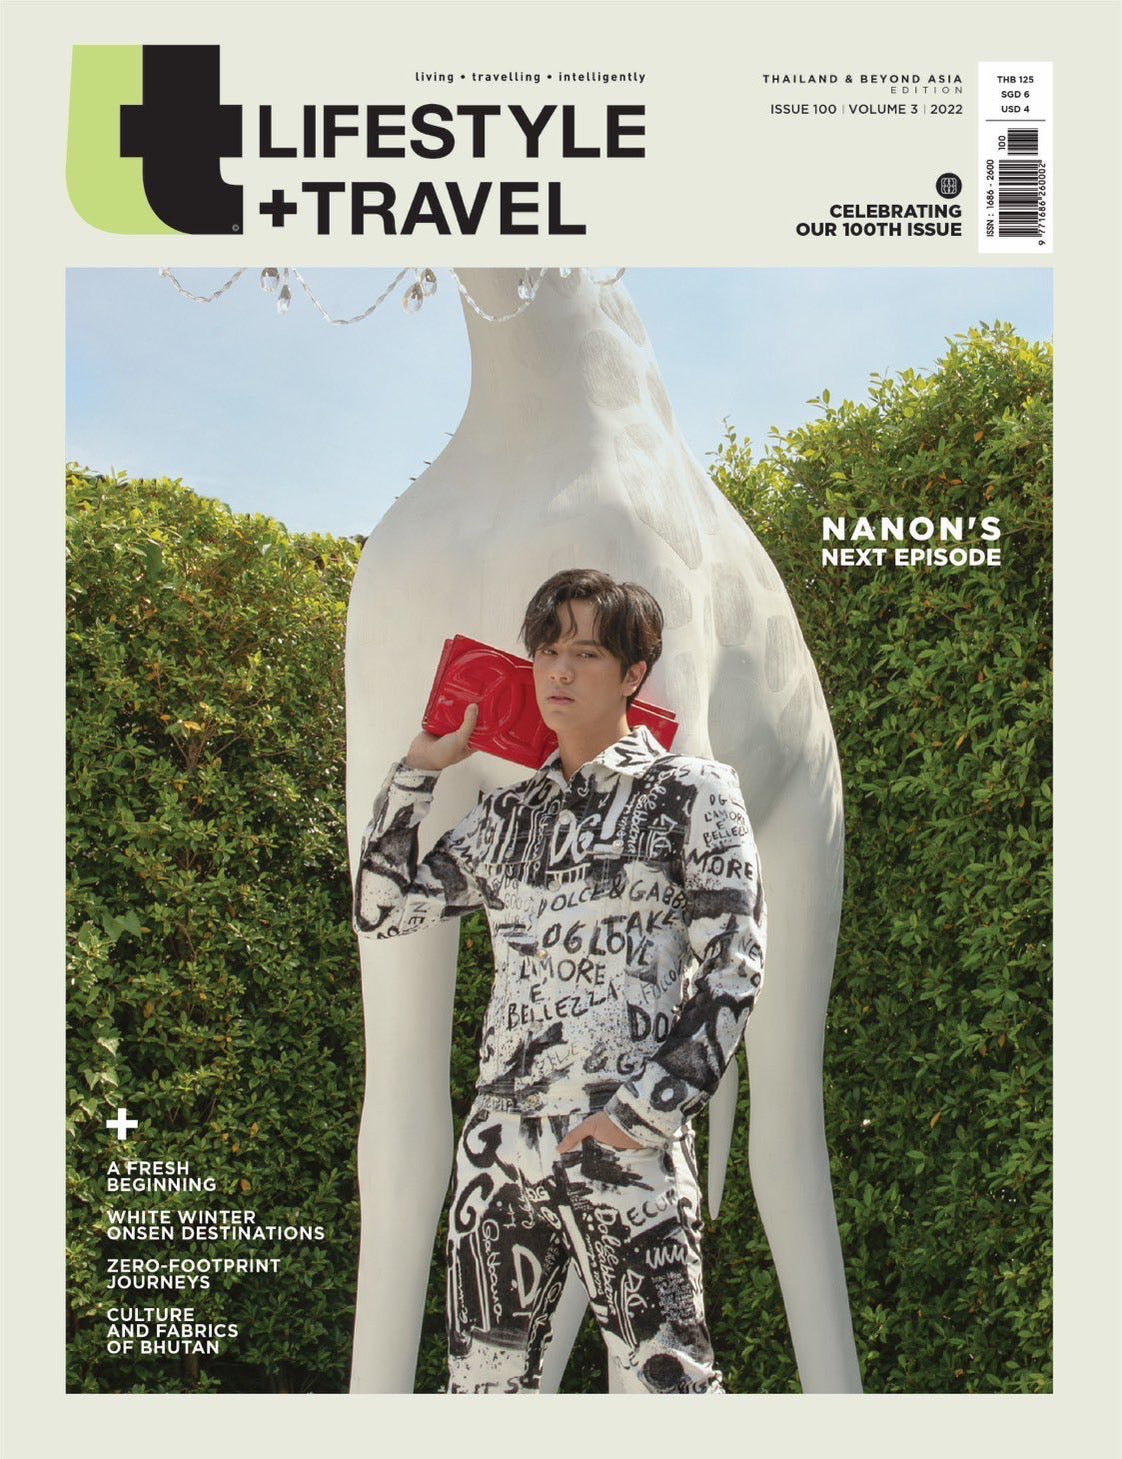 Nanon Korapat
LIFESTYLE+TRAVEL Special Edition Issue 100 / 2022